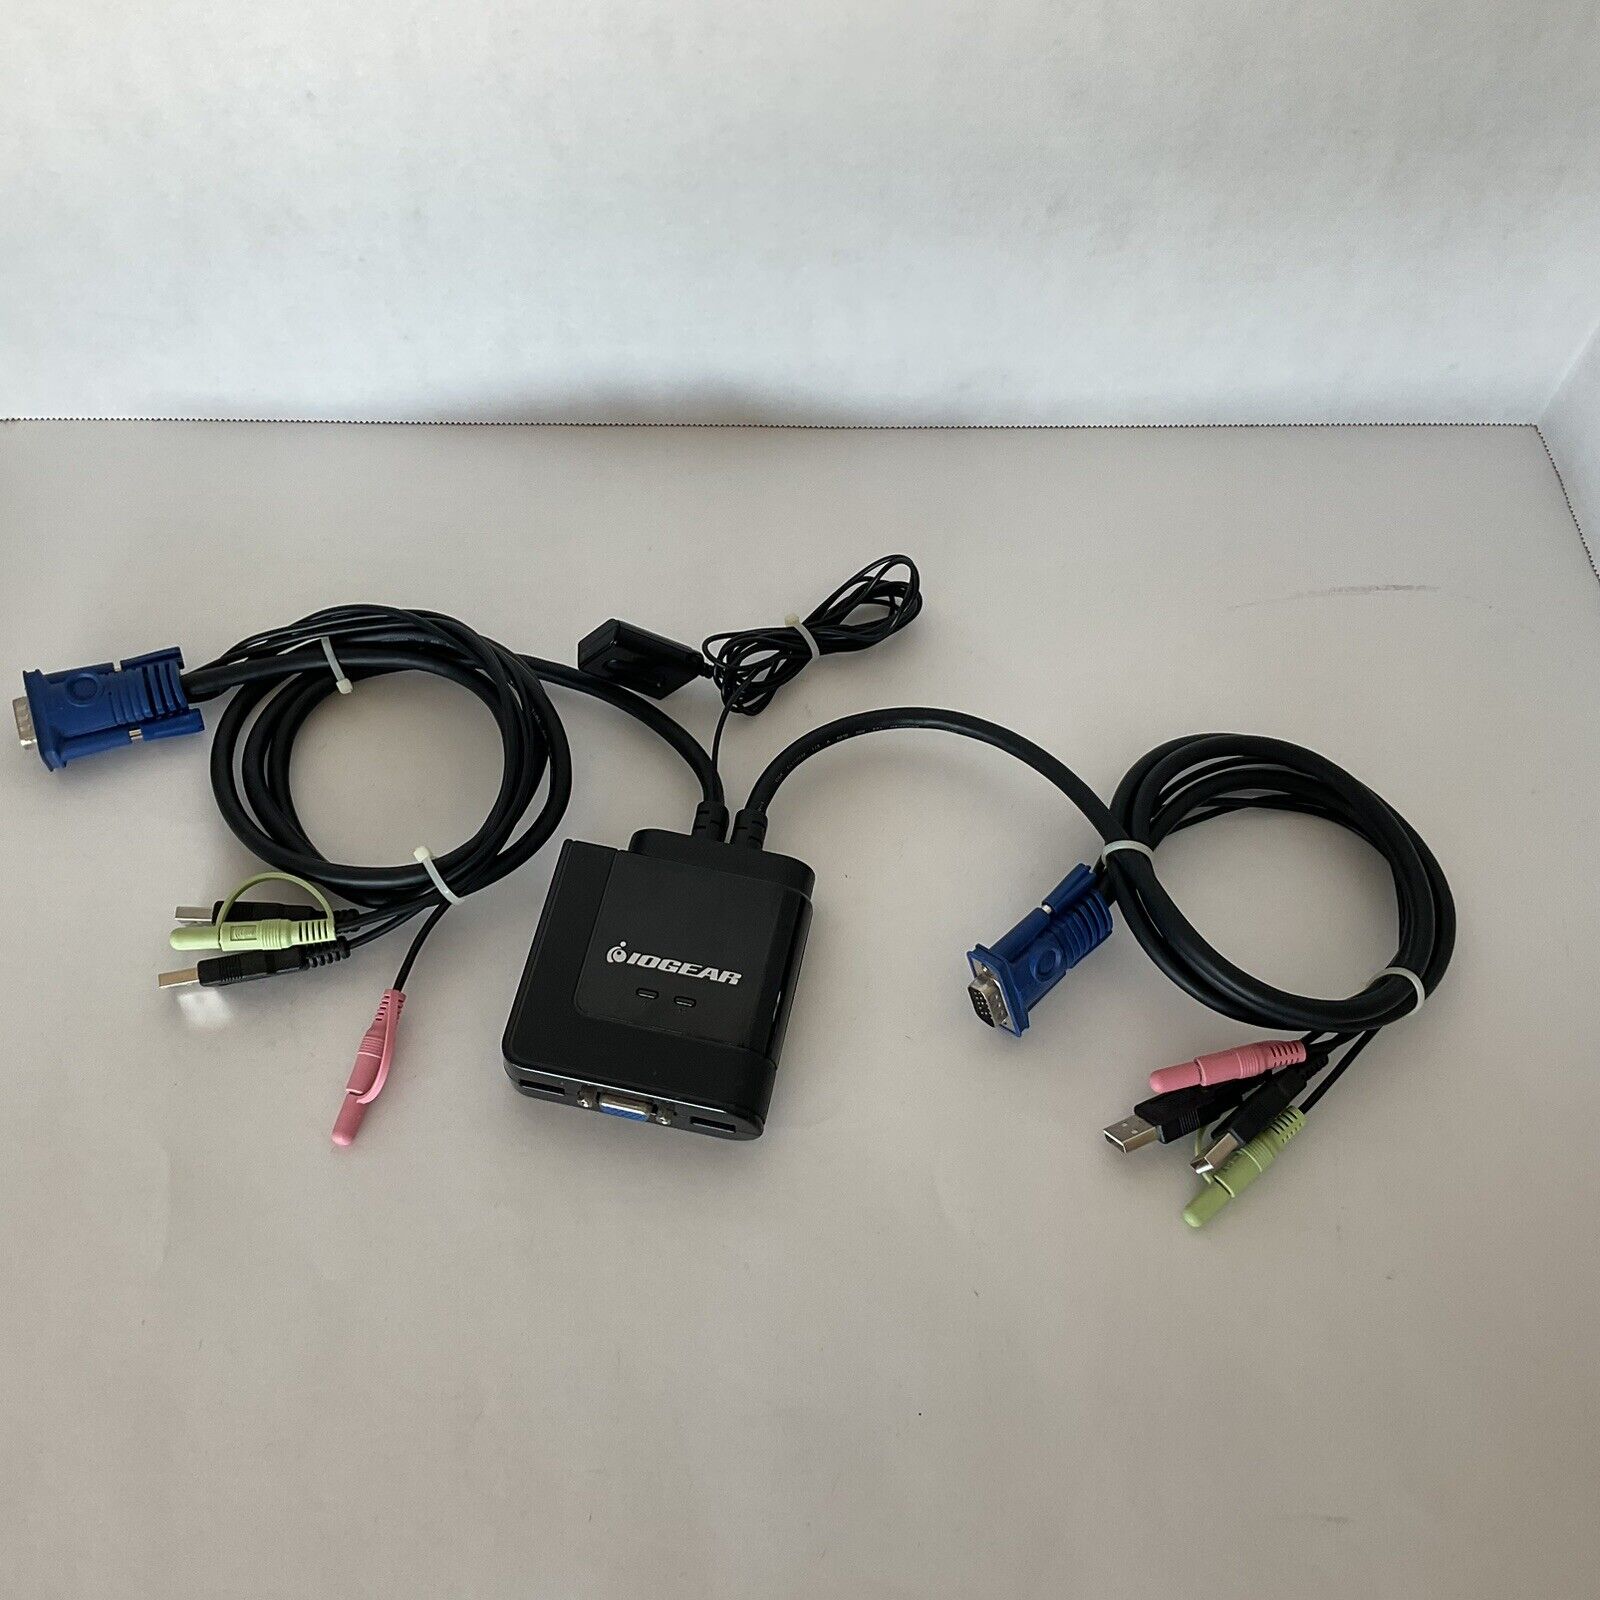 IOGEAR 2 Port USB Cable KVM Switch w/ Audio & Microphone Support Model GCS72U